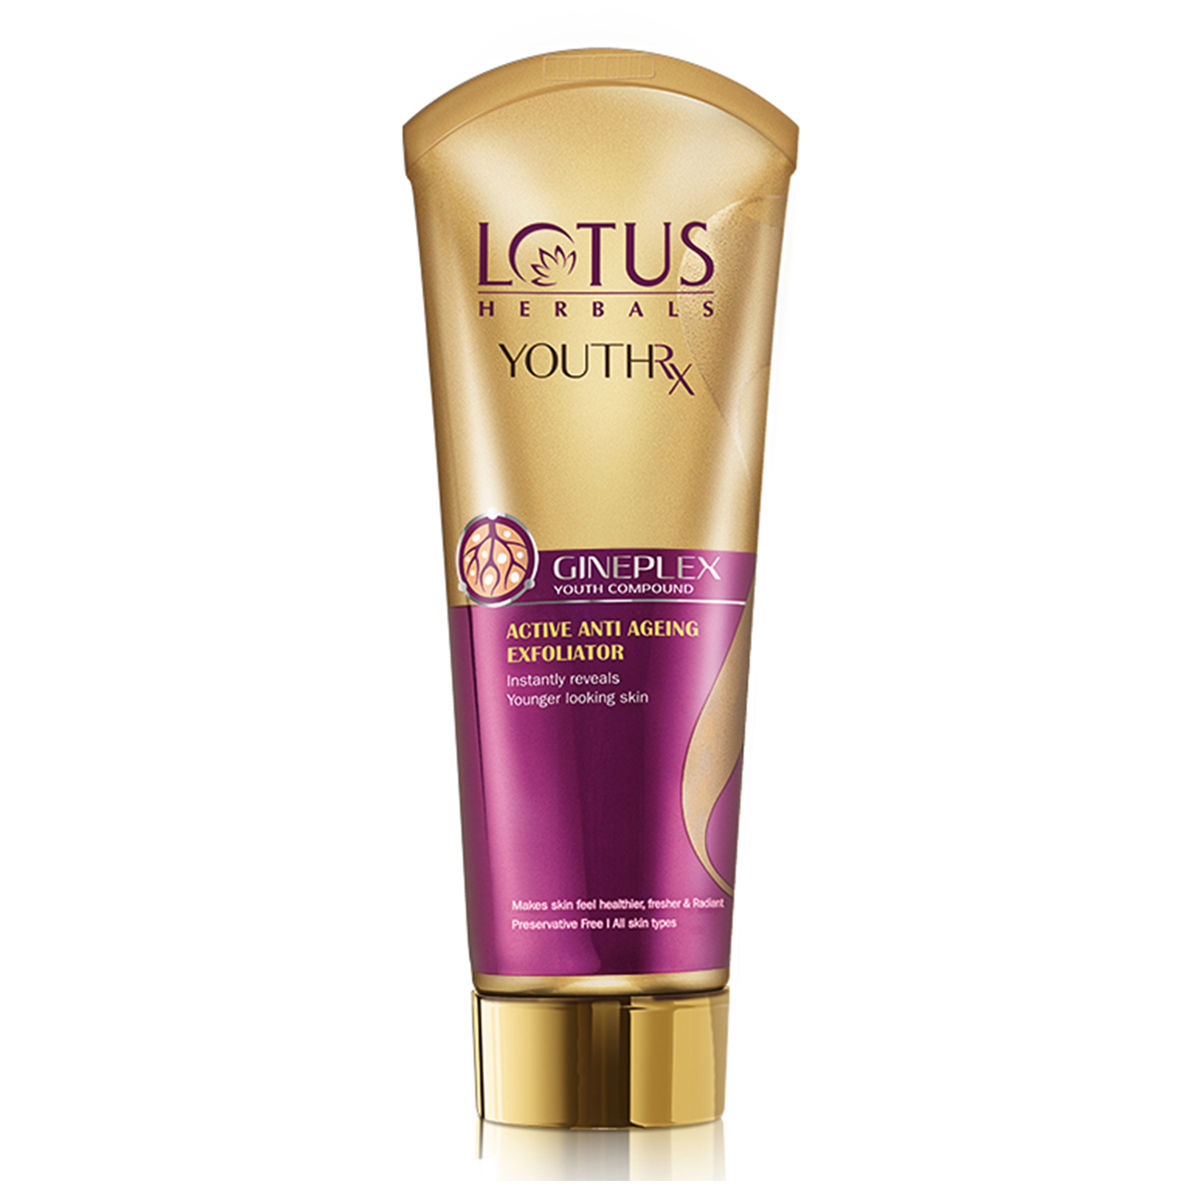 Buy Lotus Youthrx Active Anti Ageing Exfoliator, 100 ml Online